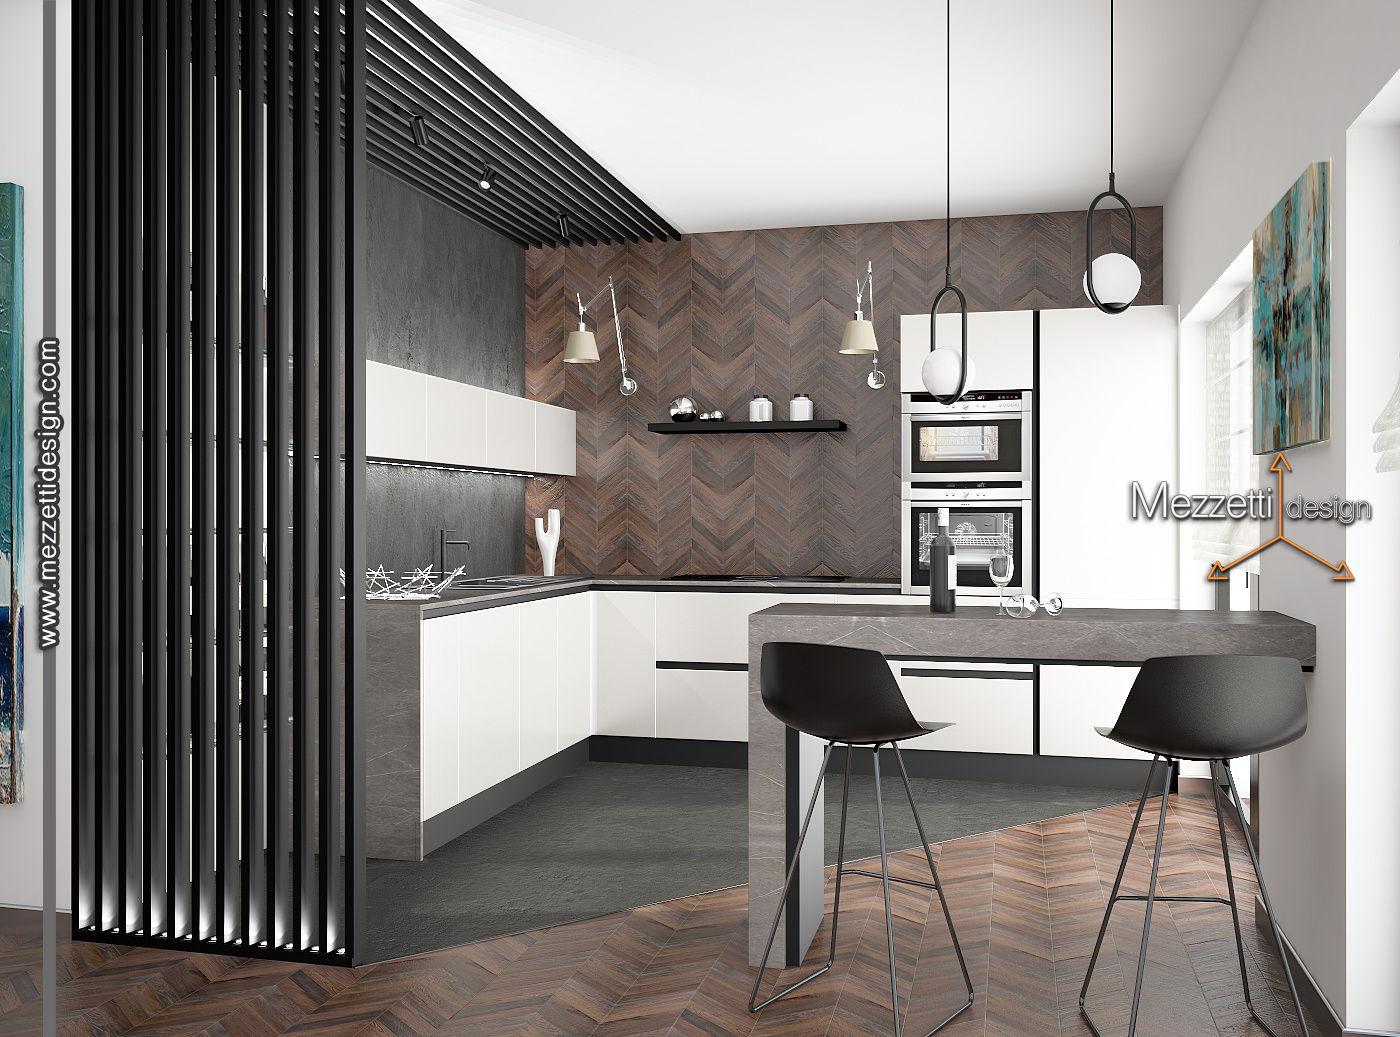 Cucina con isola, Mezzetti design Mezzetti design Built-in kitchens Wood Wood effect